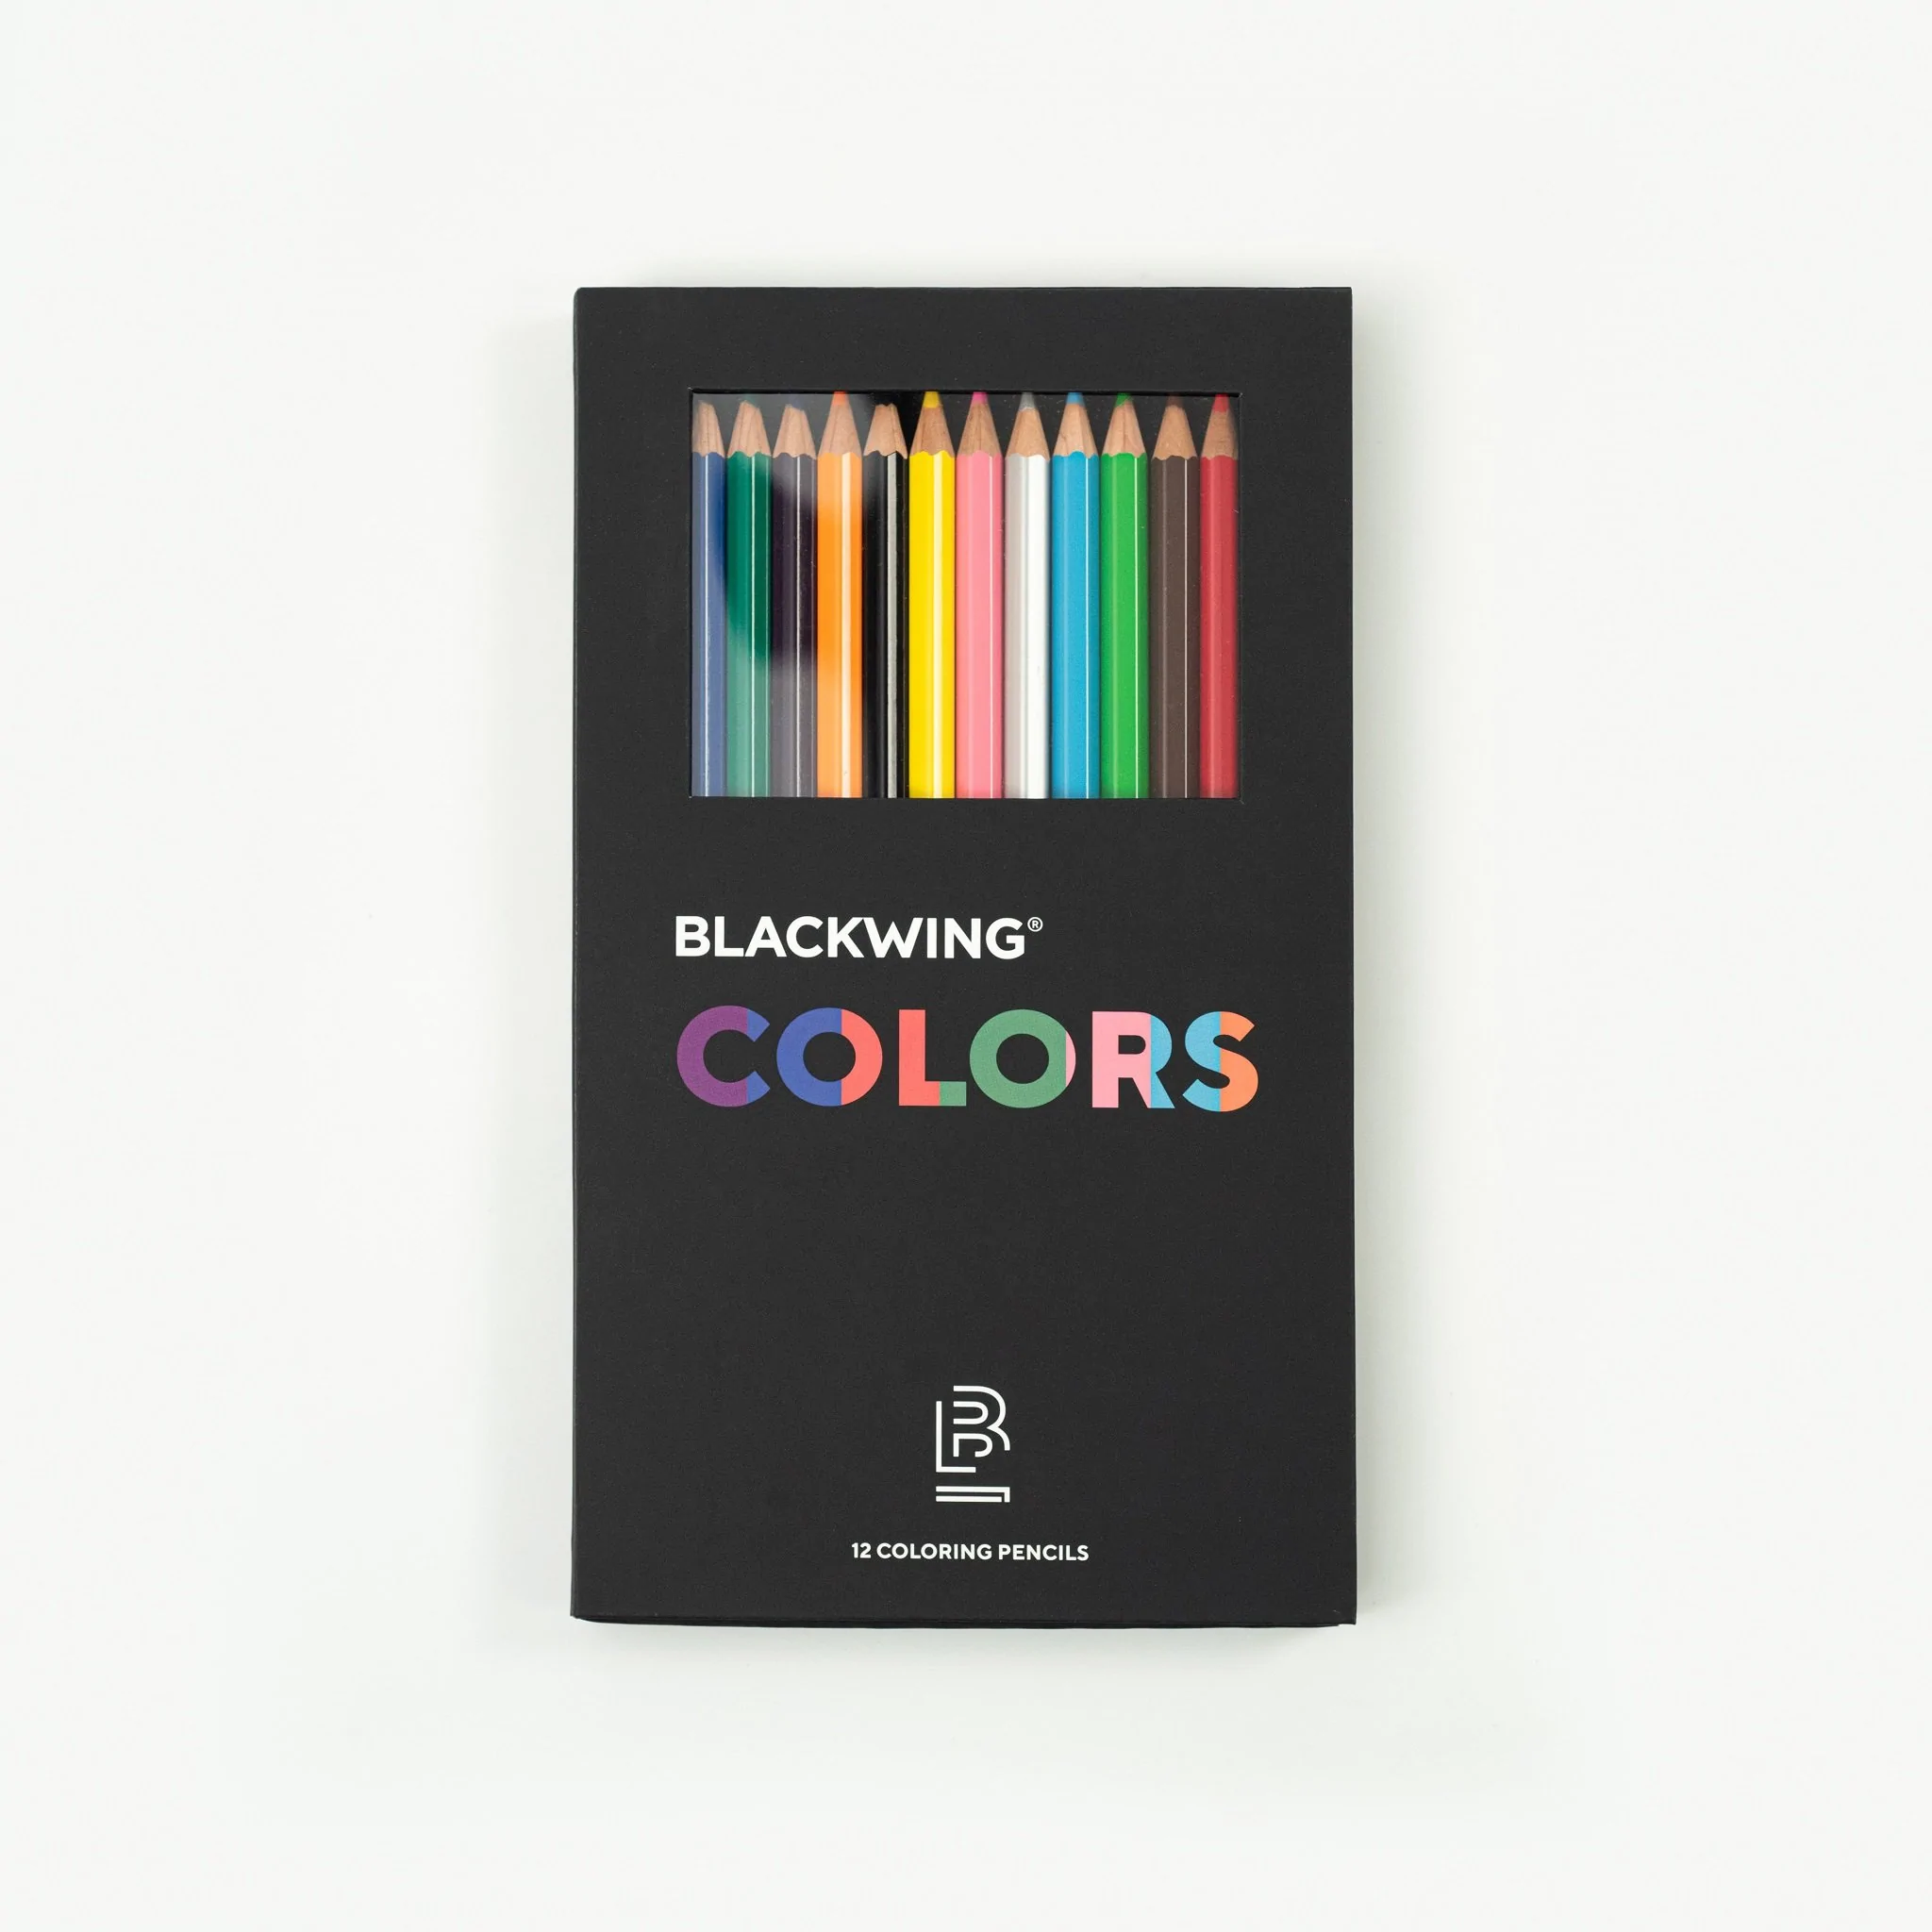 BLACKWING Set of 12 Blackwing Colors